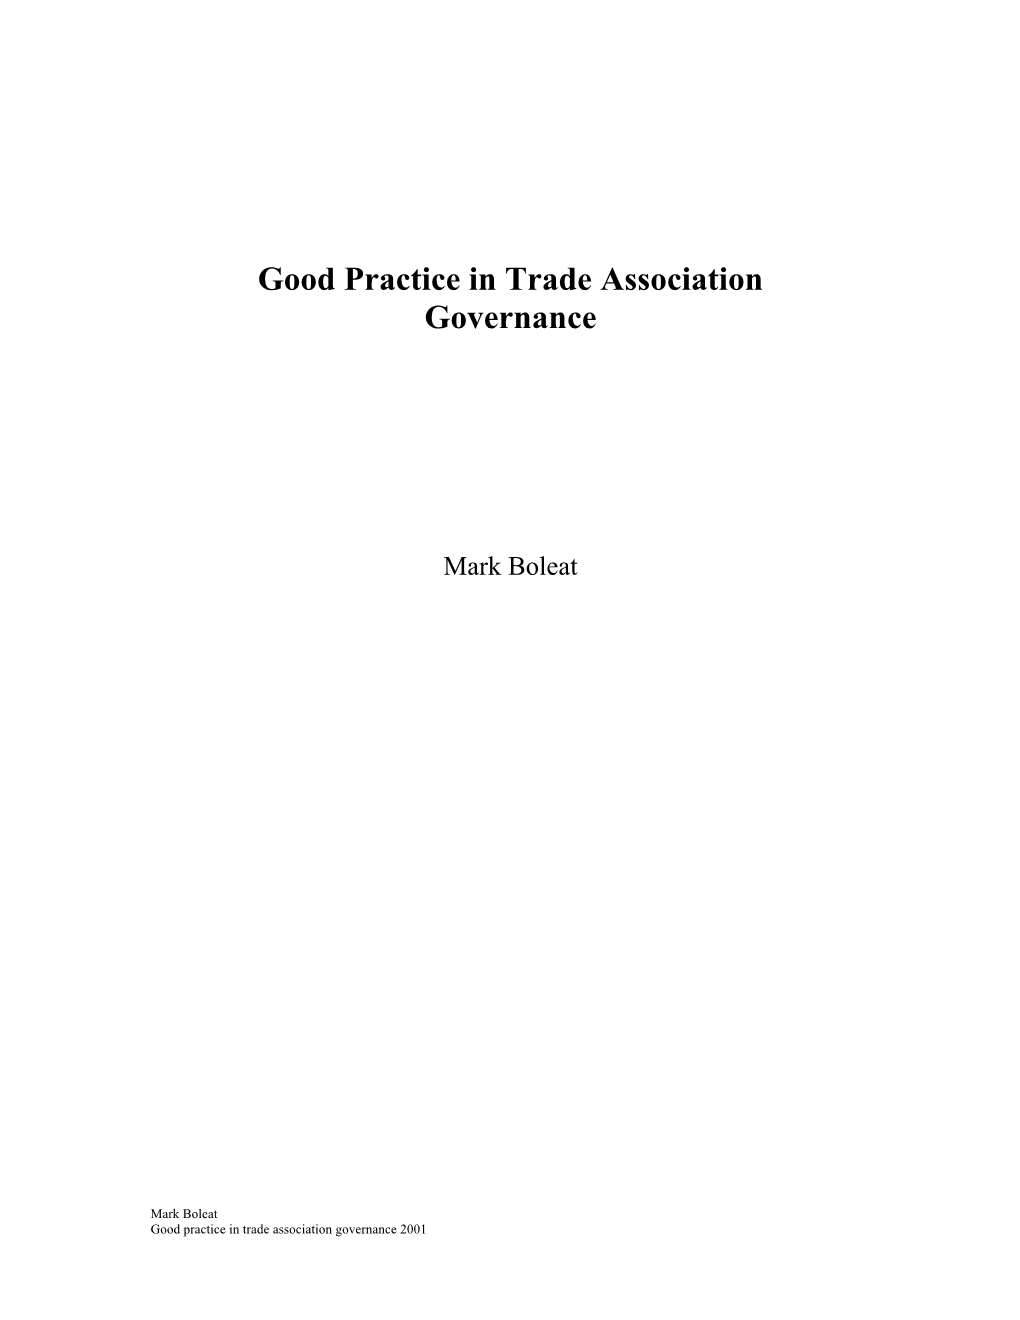 Good Practice in Trade Association Governance